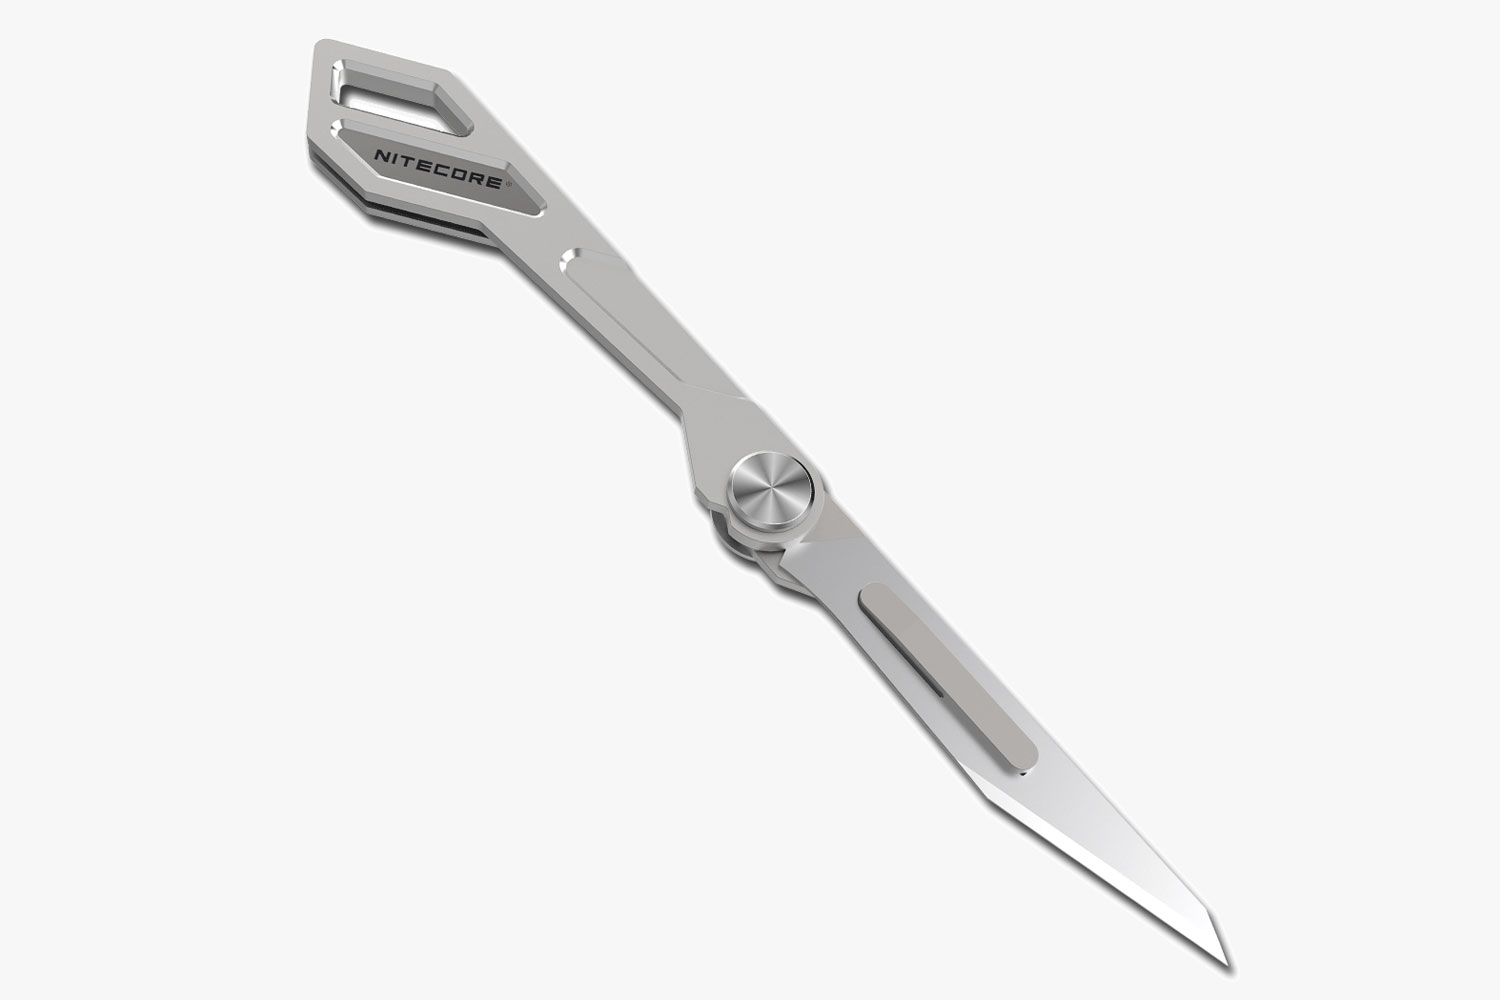 Nitecore’s Cutting-Edge Scalpel Folding Knife